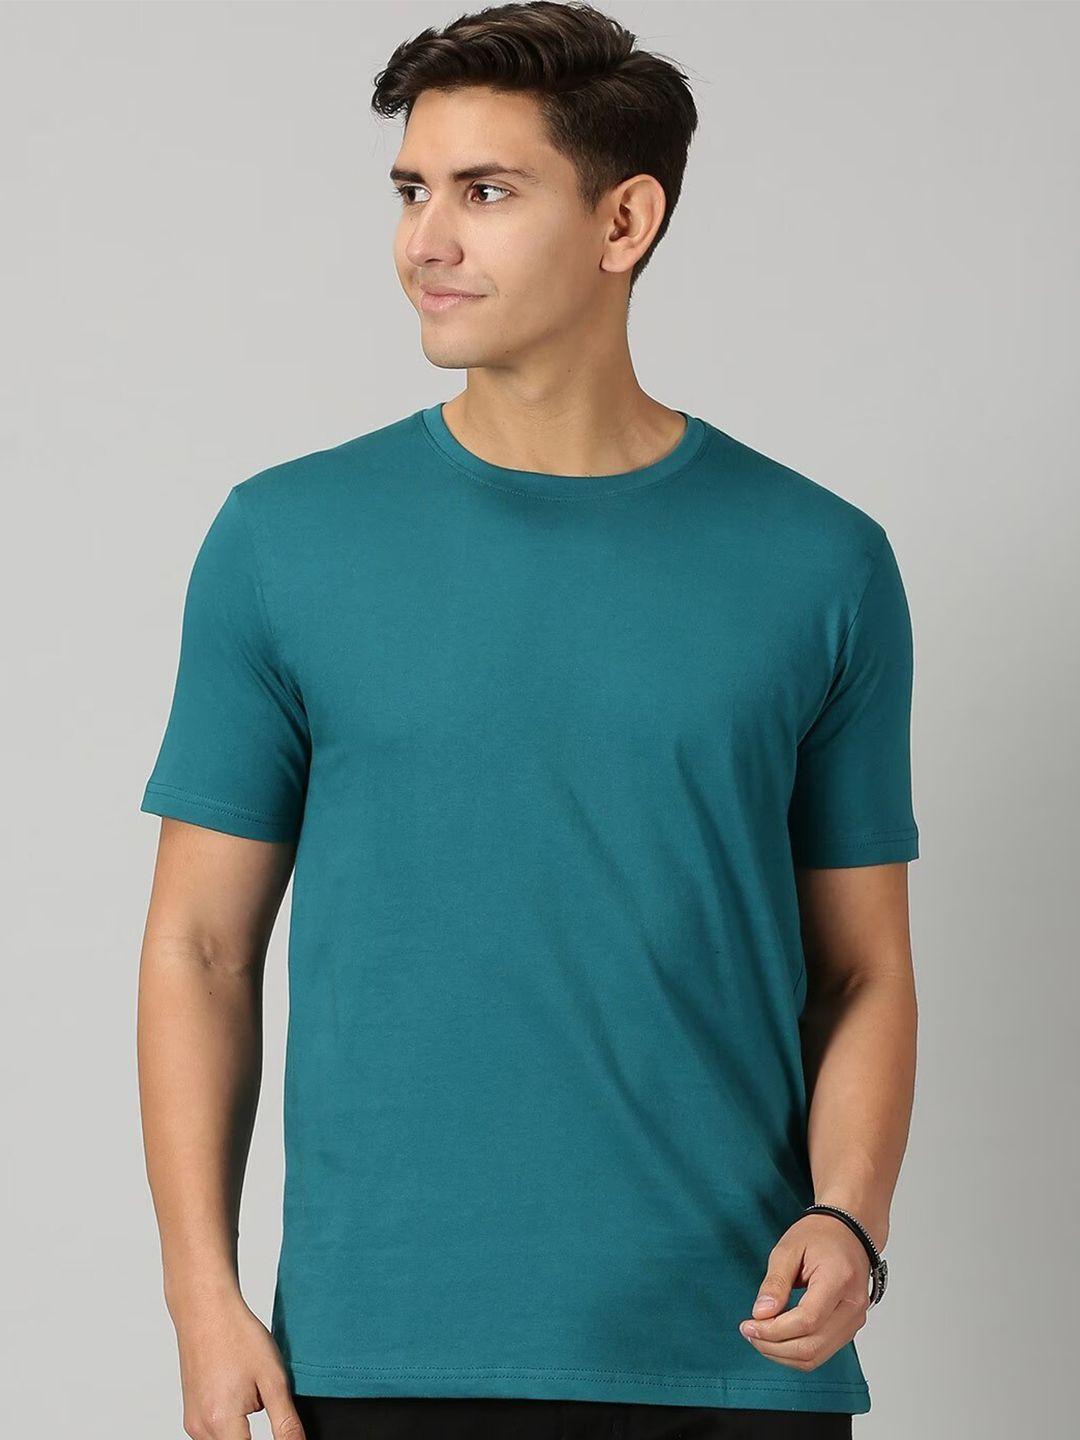 the-hollander-round-neck-pure-cotton-t-shirt